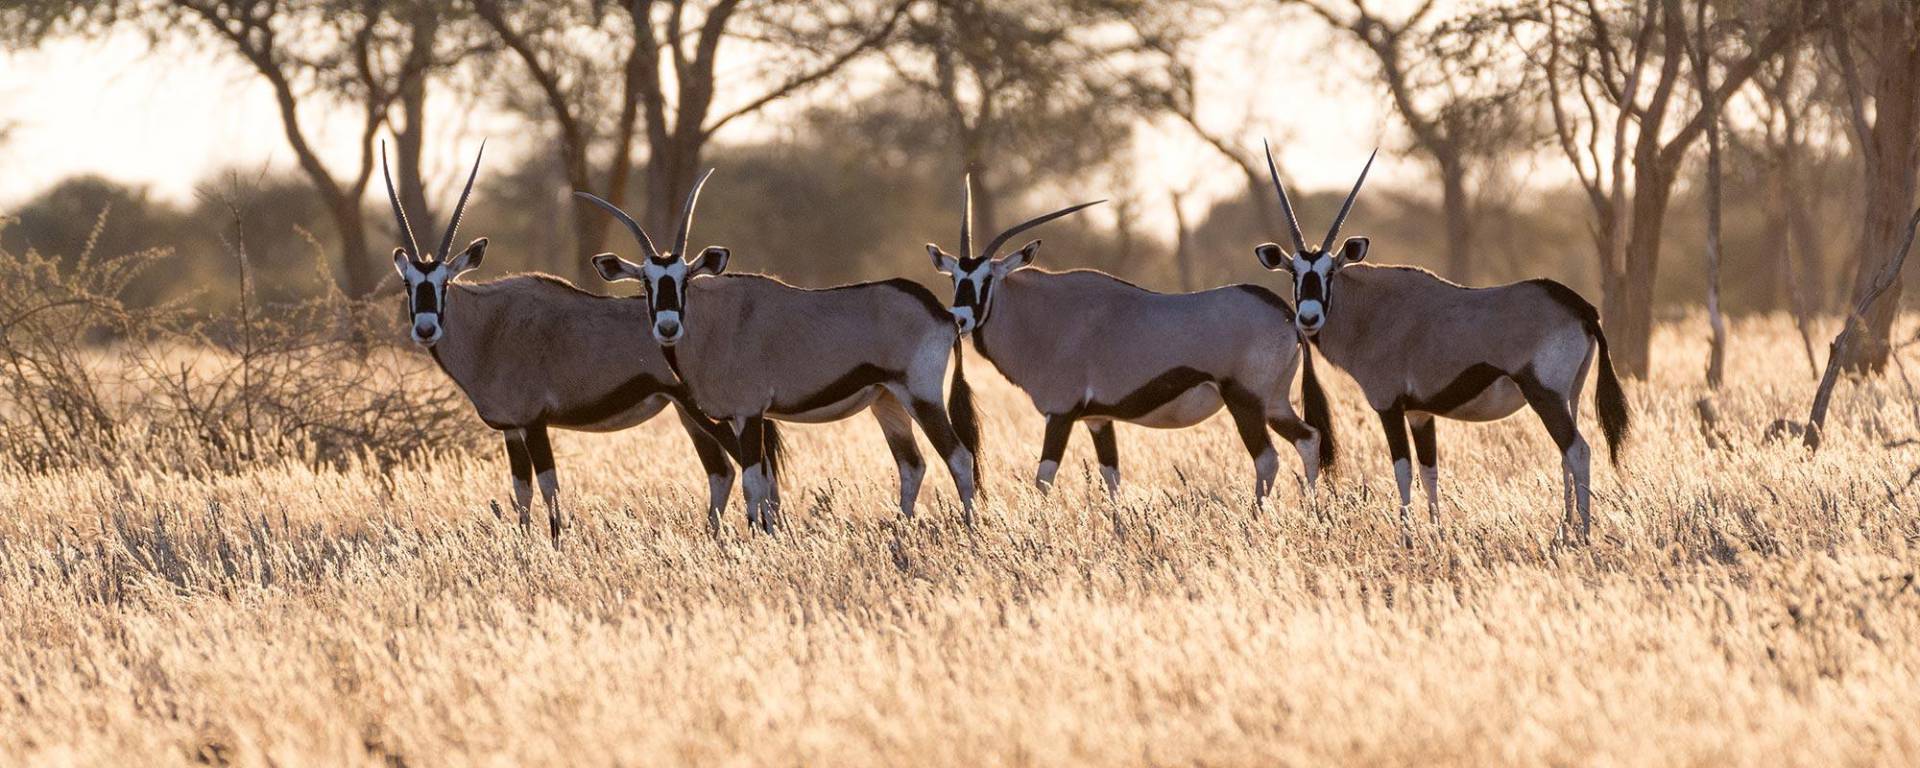 Oryx antelope at Kuzikus Wldlife Reserve